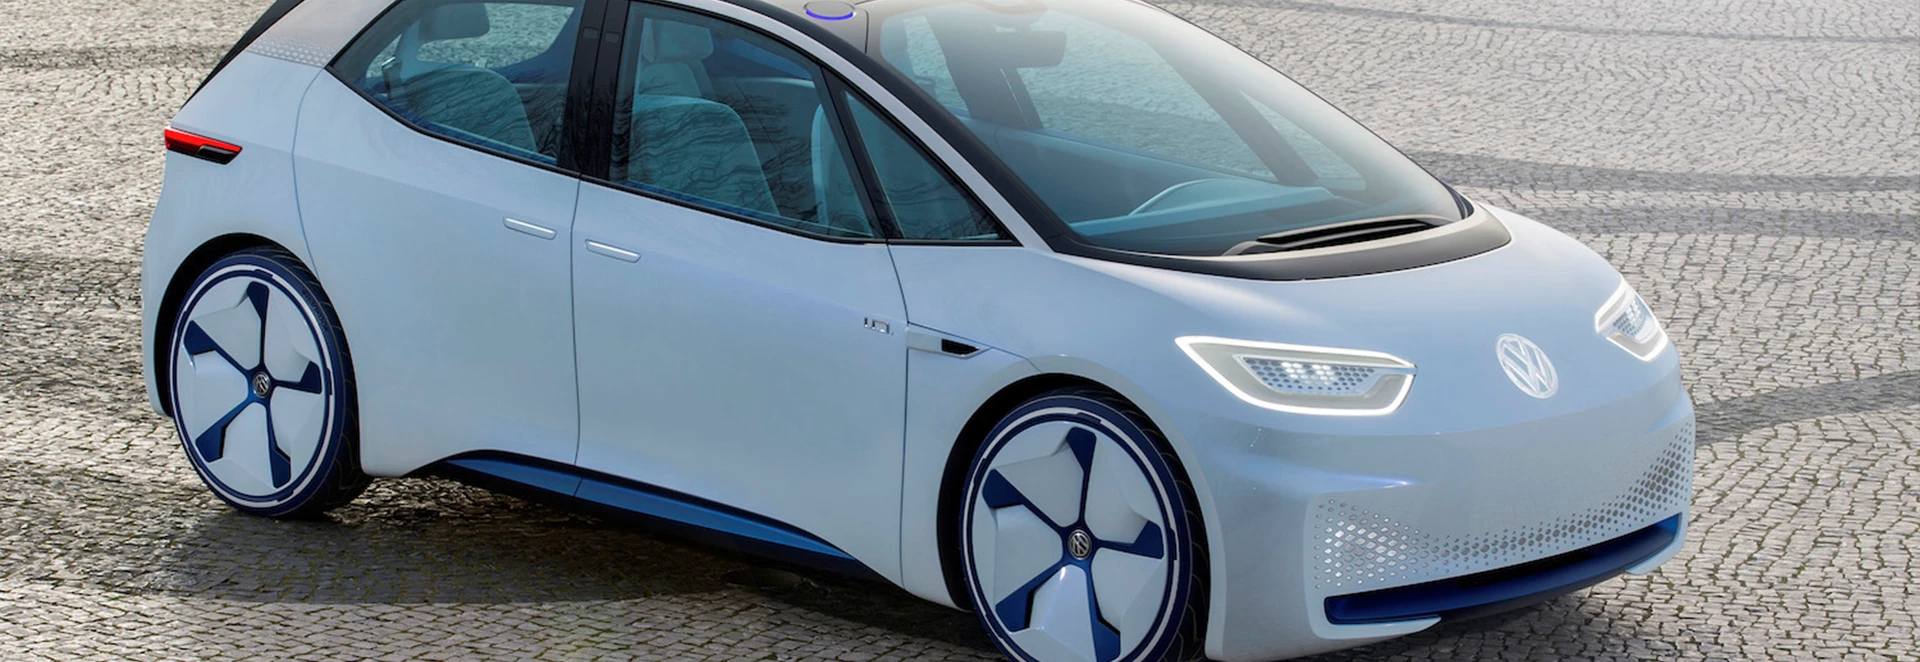 Volkswagen Group plans 22m EV sales by 2028